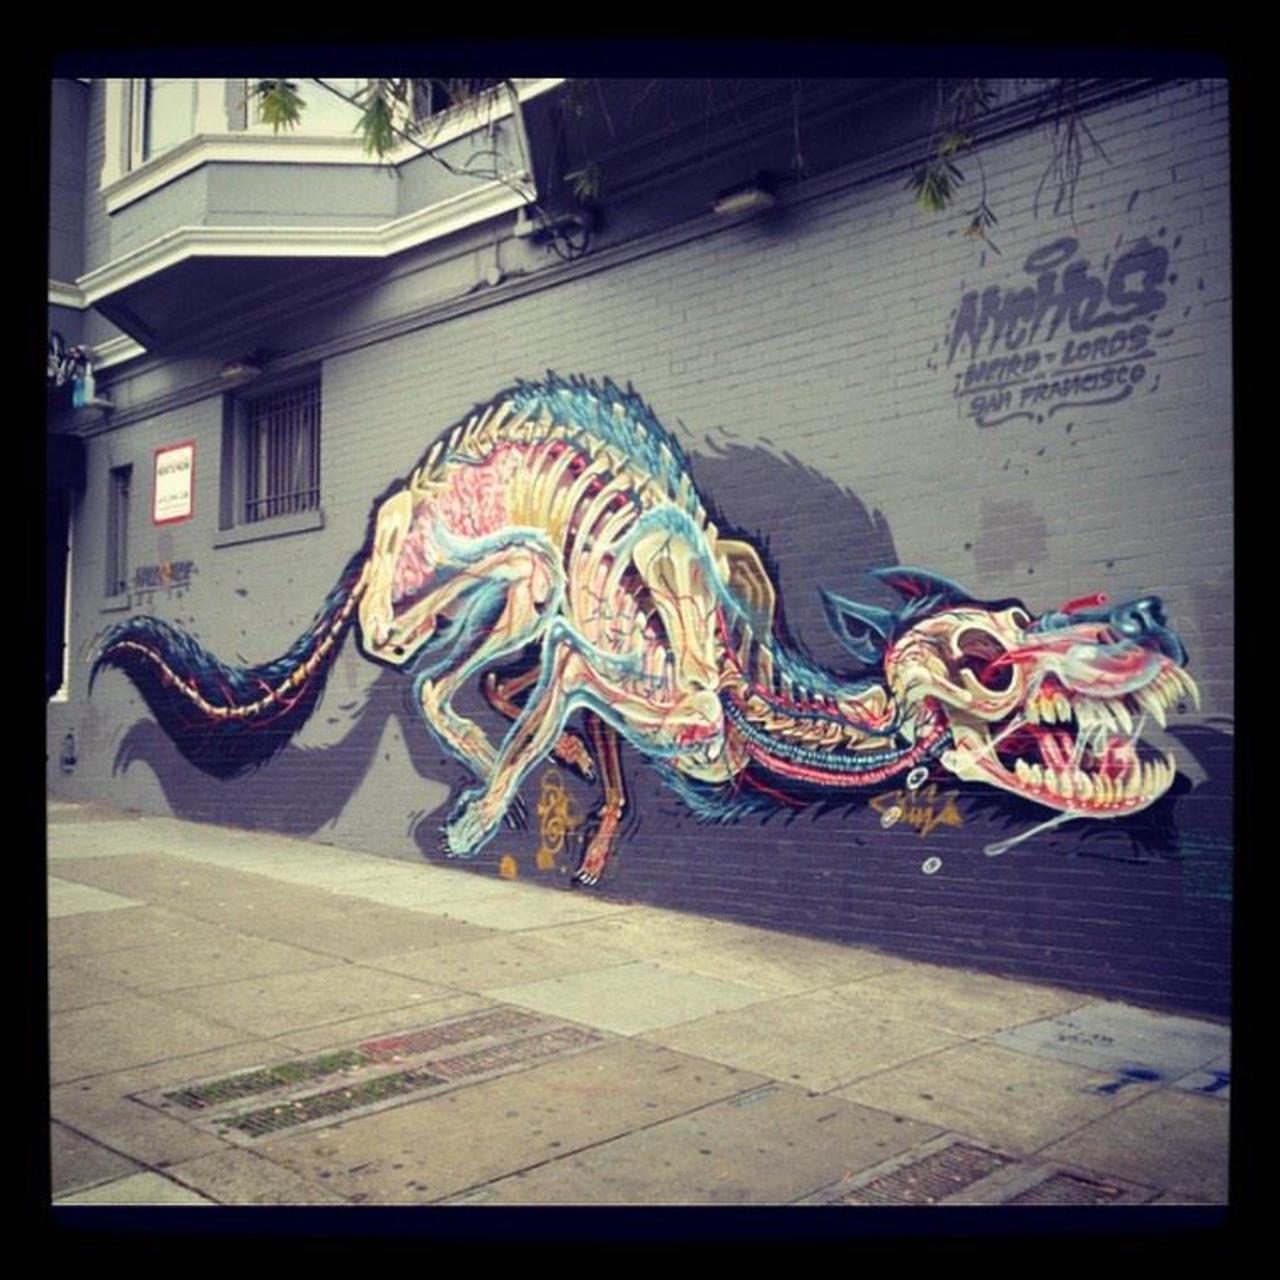 Strolling around the #Haight #sidewalk #view #mural #graffiti #streetArt #sf #SanFrancisco #california #alwaysSF http://t.co/yV6aBk8sG8